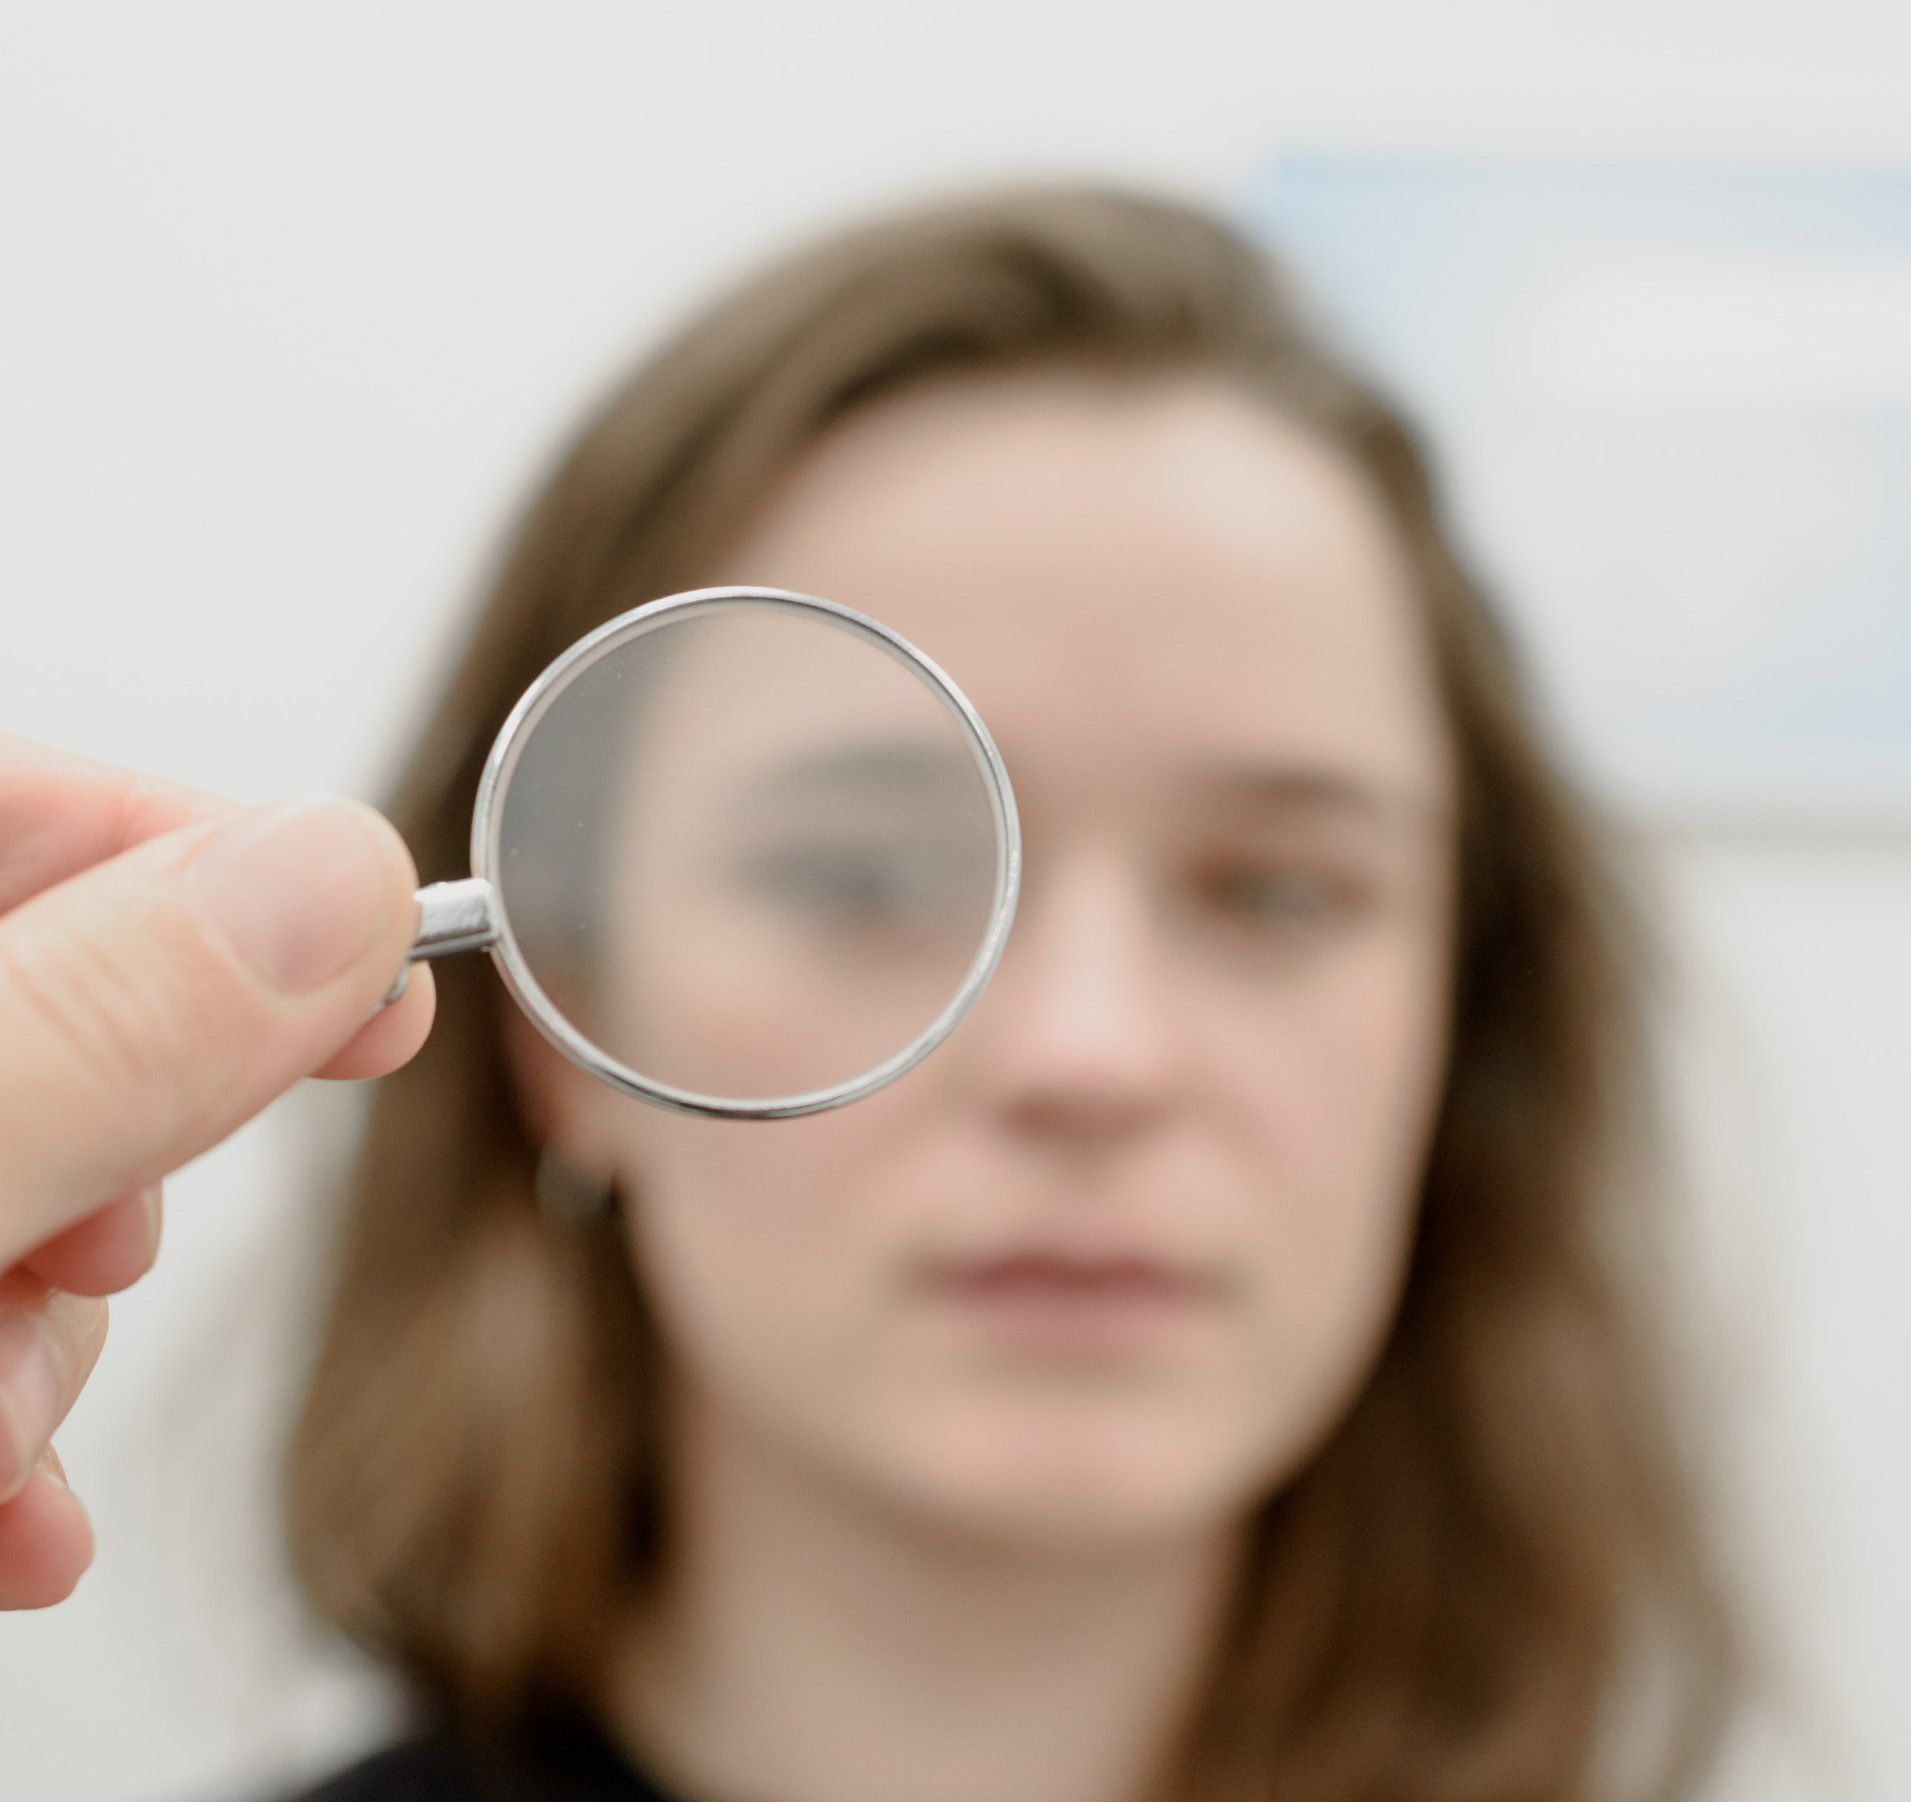 Blurred image of lady through handheld optometry lens.